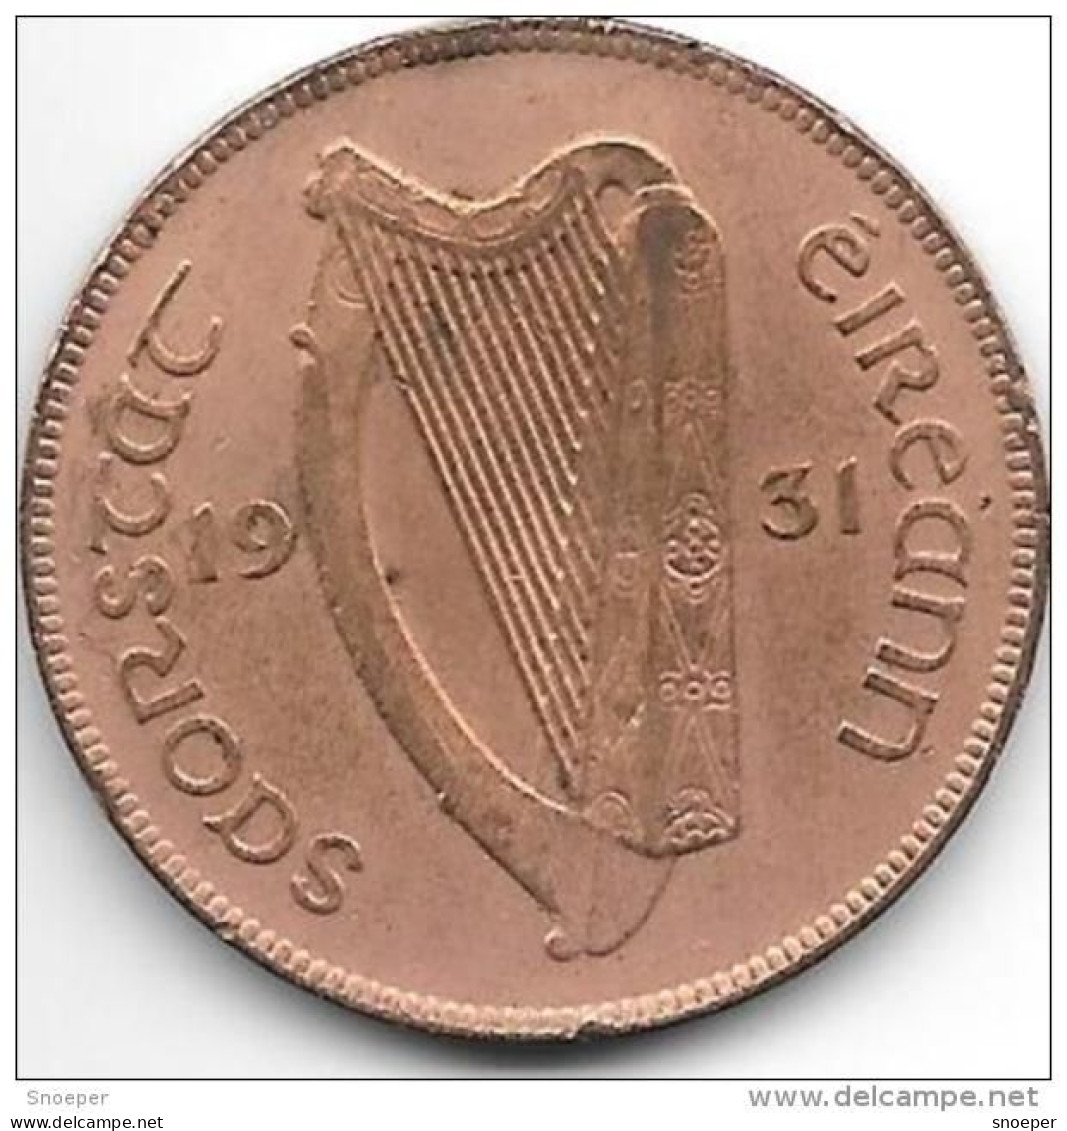 *ireland  1 Penny  1931  Km 3  Vf+ - Irlanda